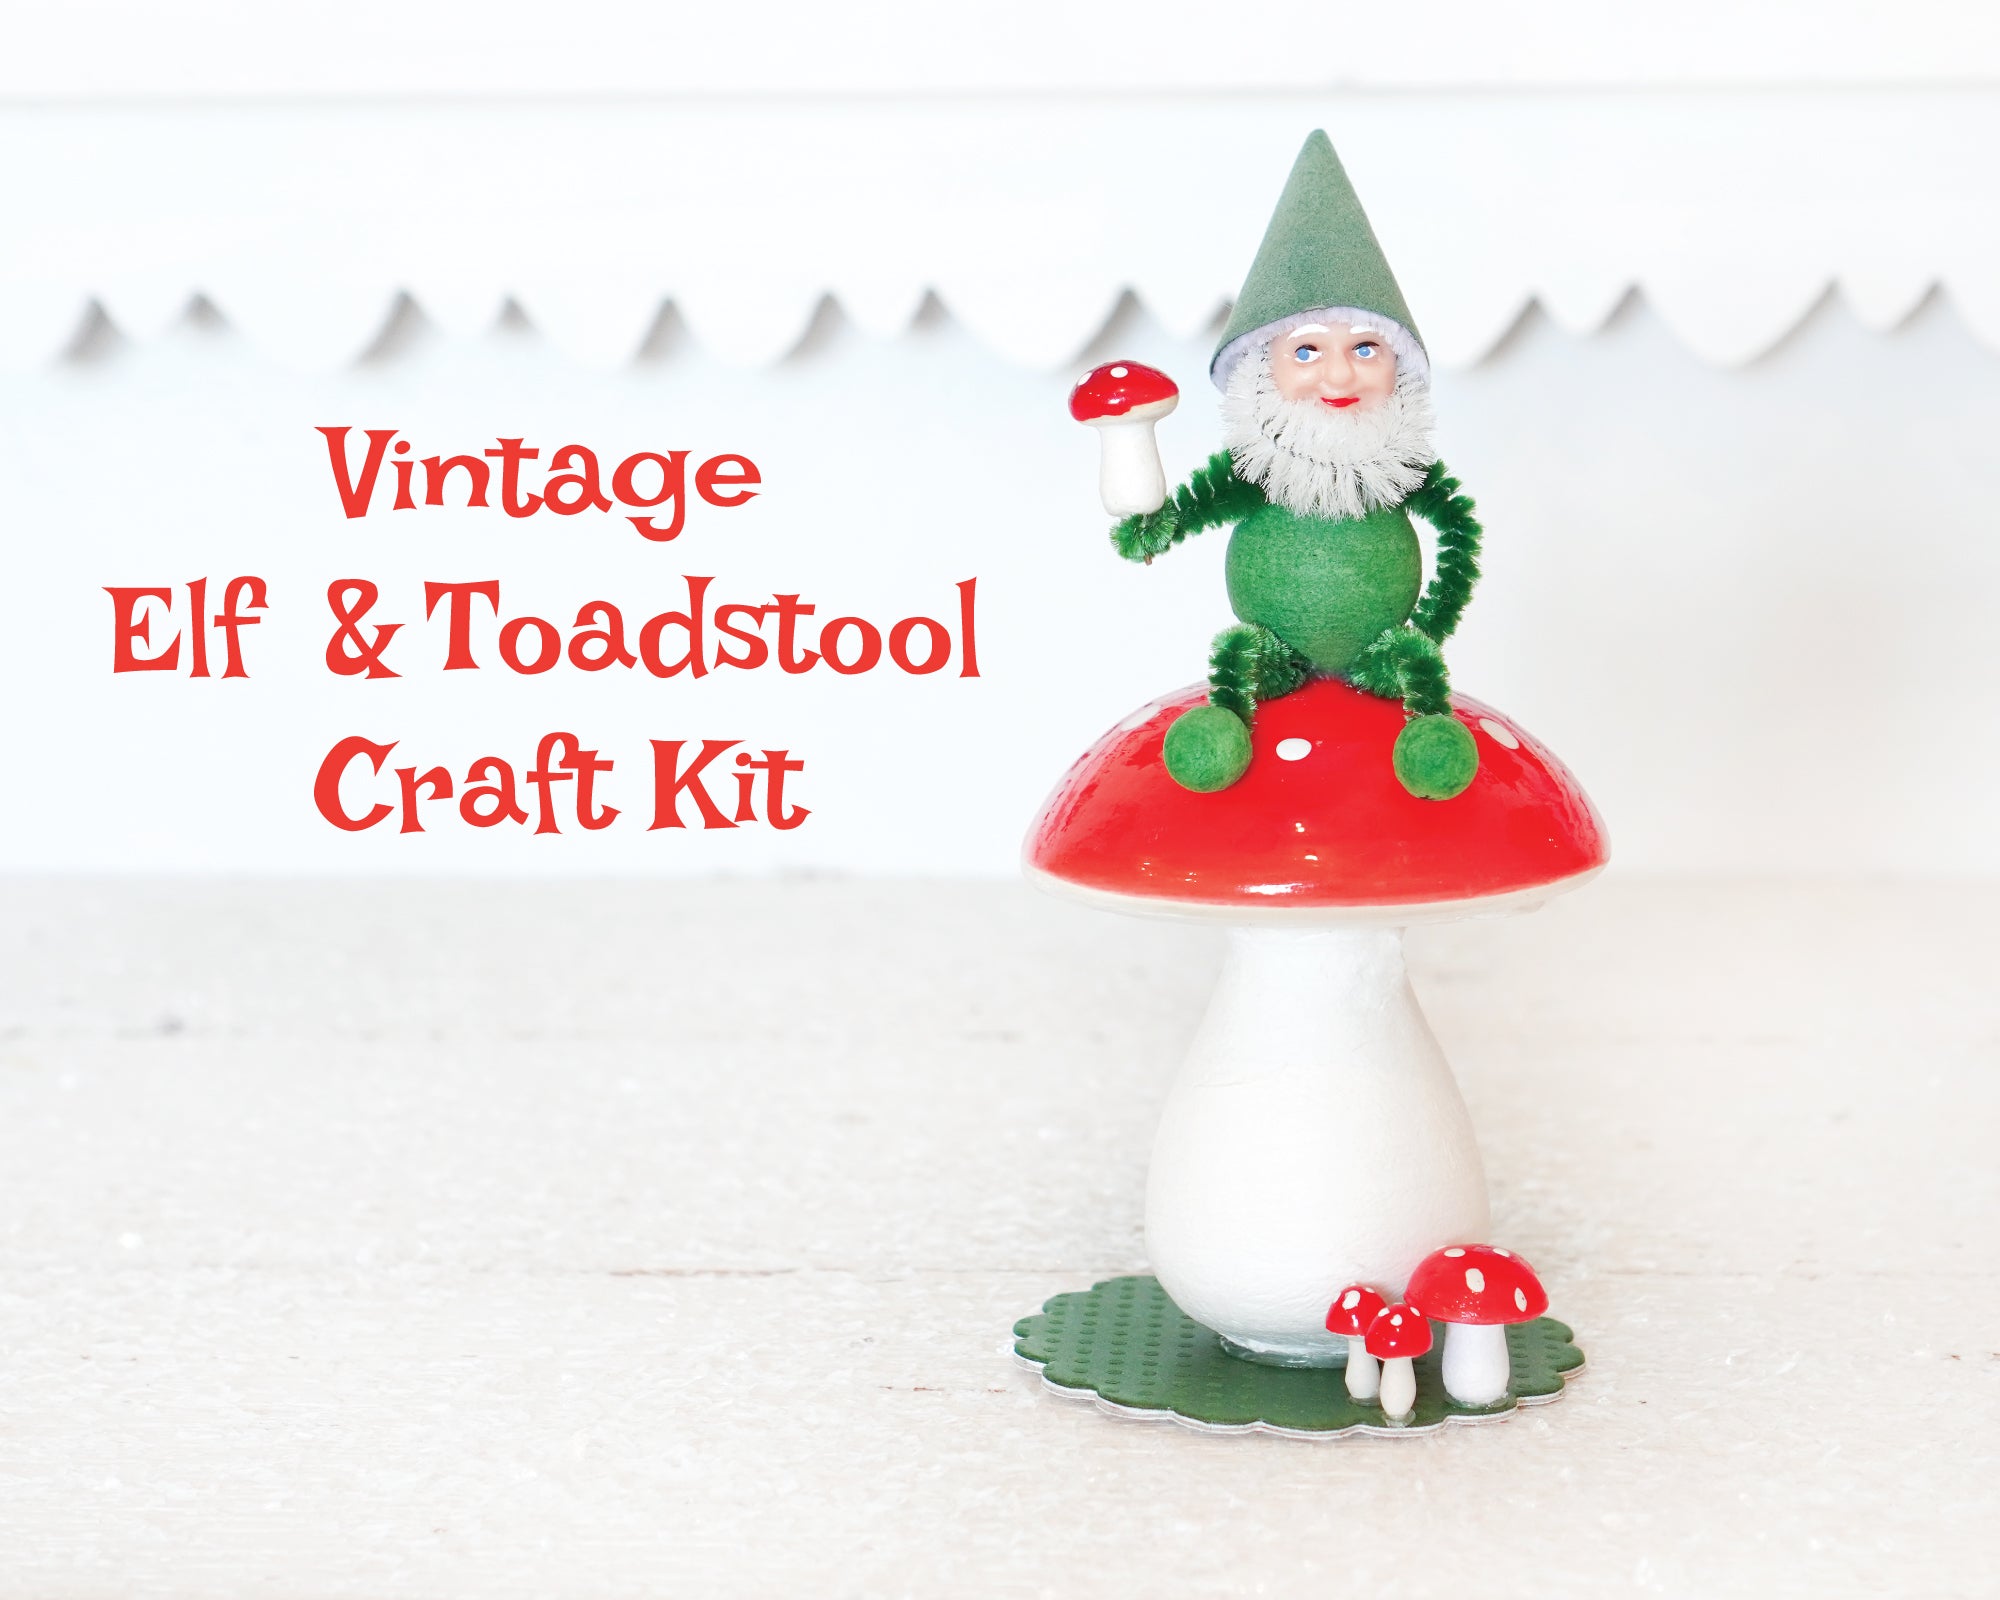 New Craft Kit! Vintage Elf & Toadstool Decoration